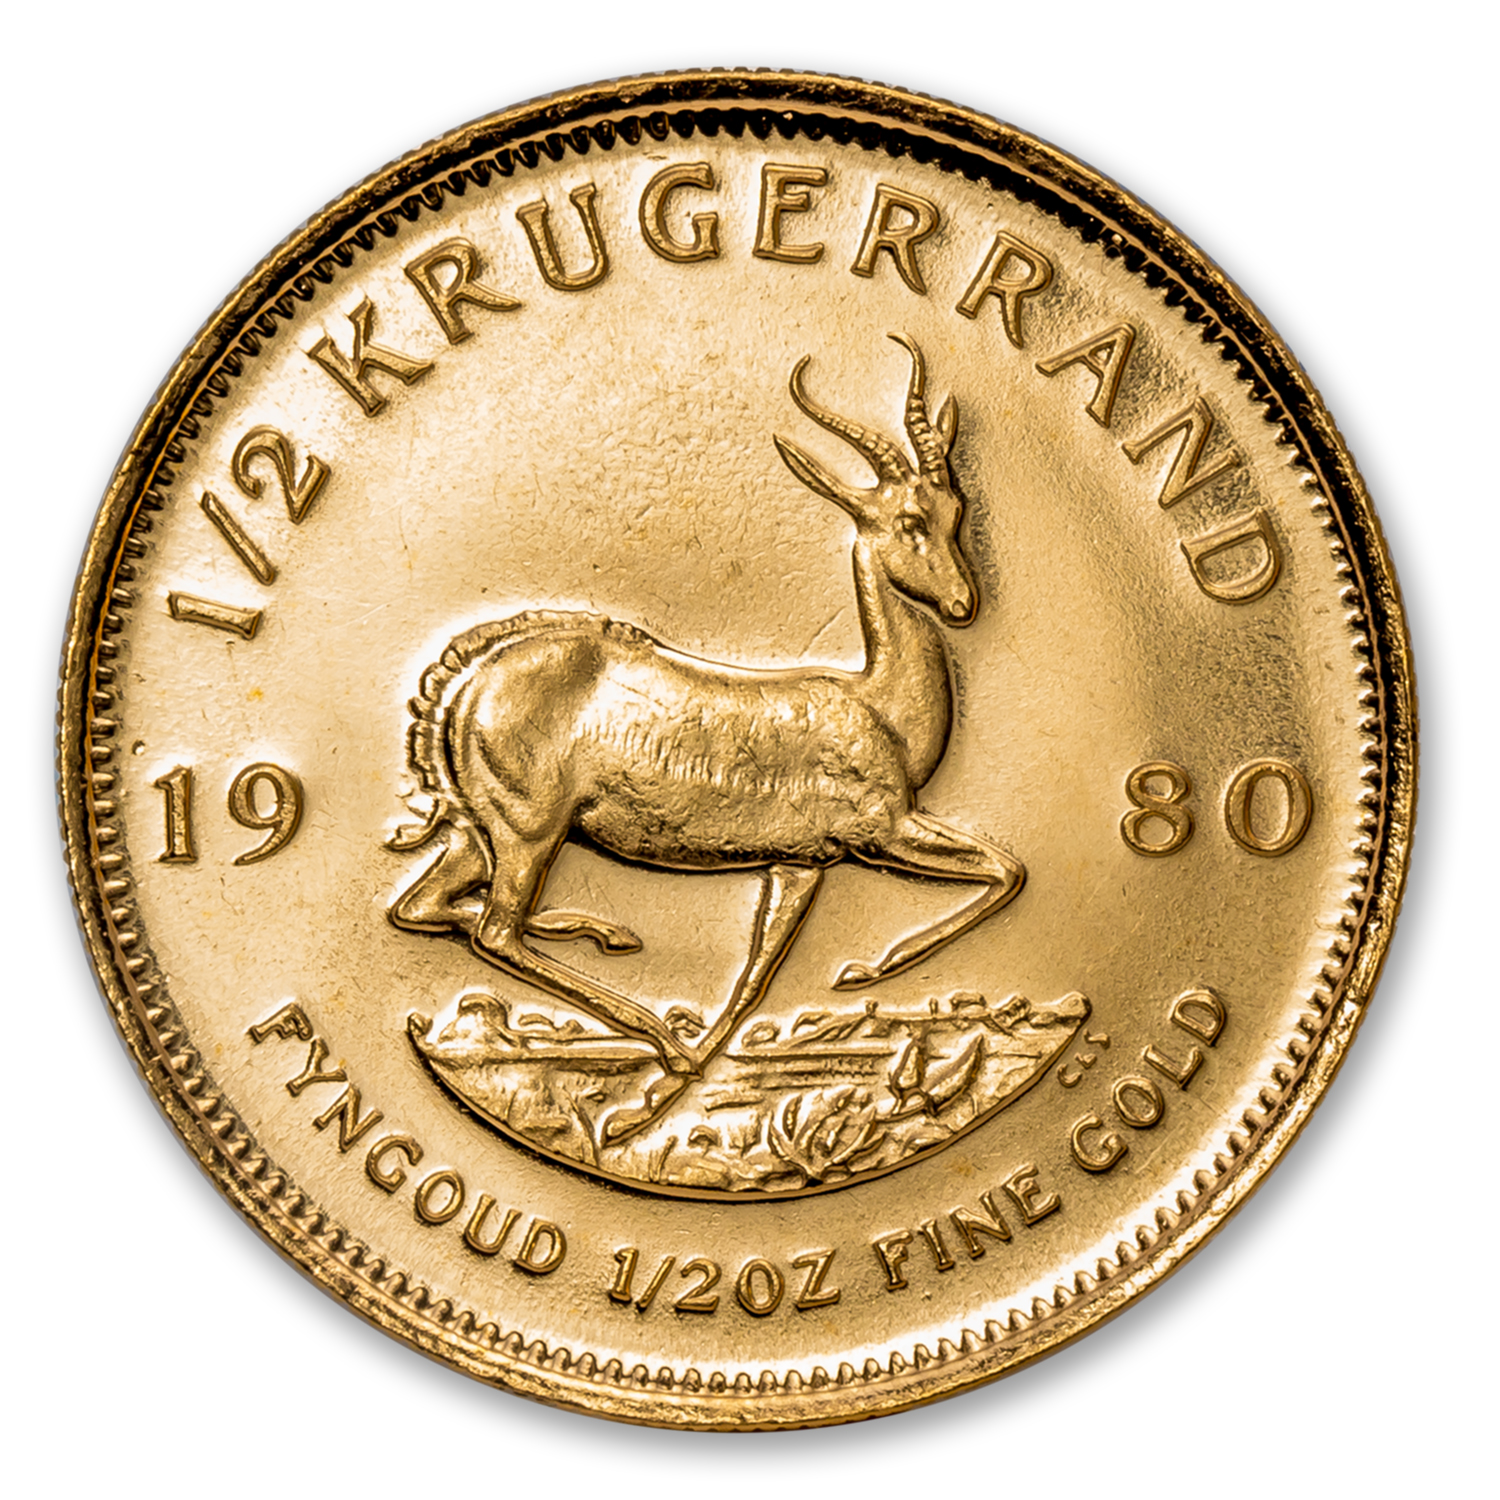 Buy 1980 South Africa 1/2 oz Gold Krugerrand BU - Click Image to Close